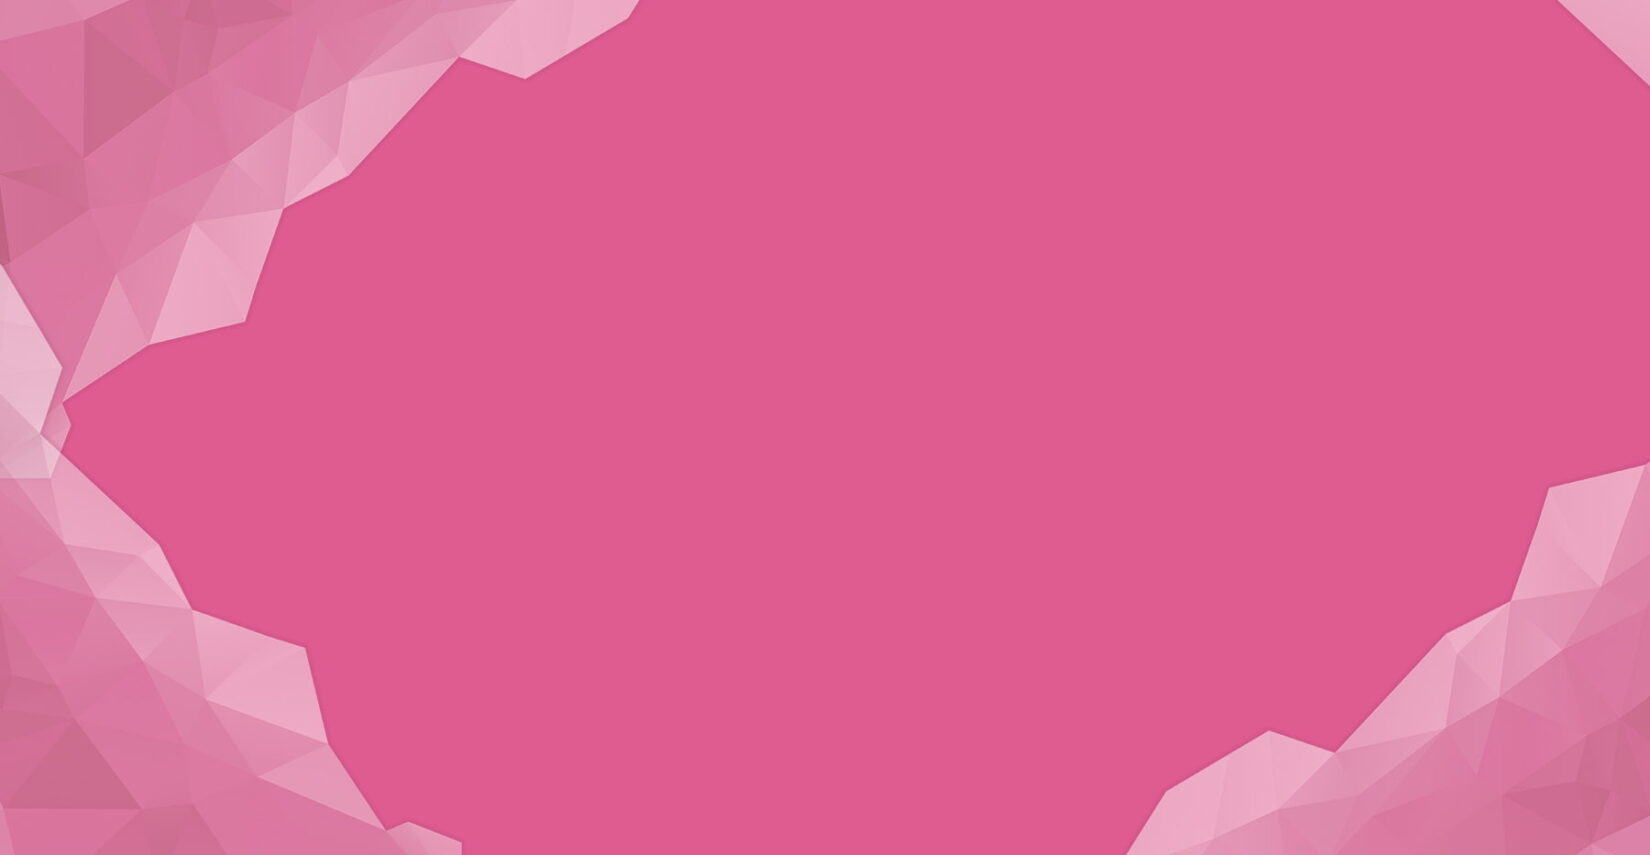 pink background texture